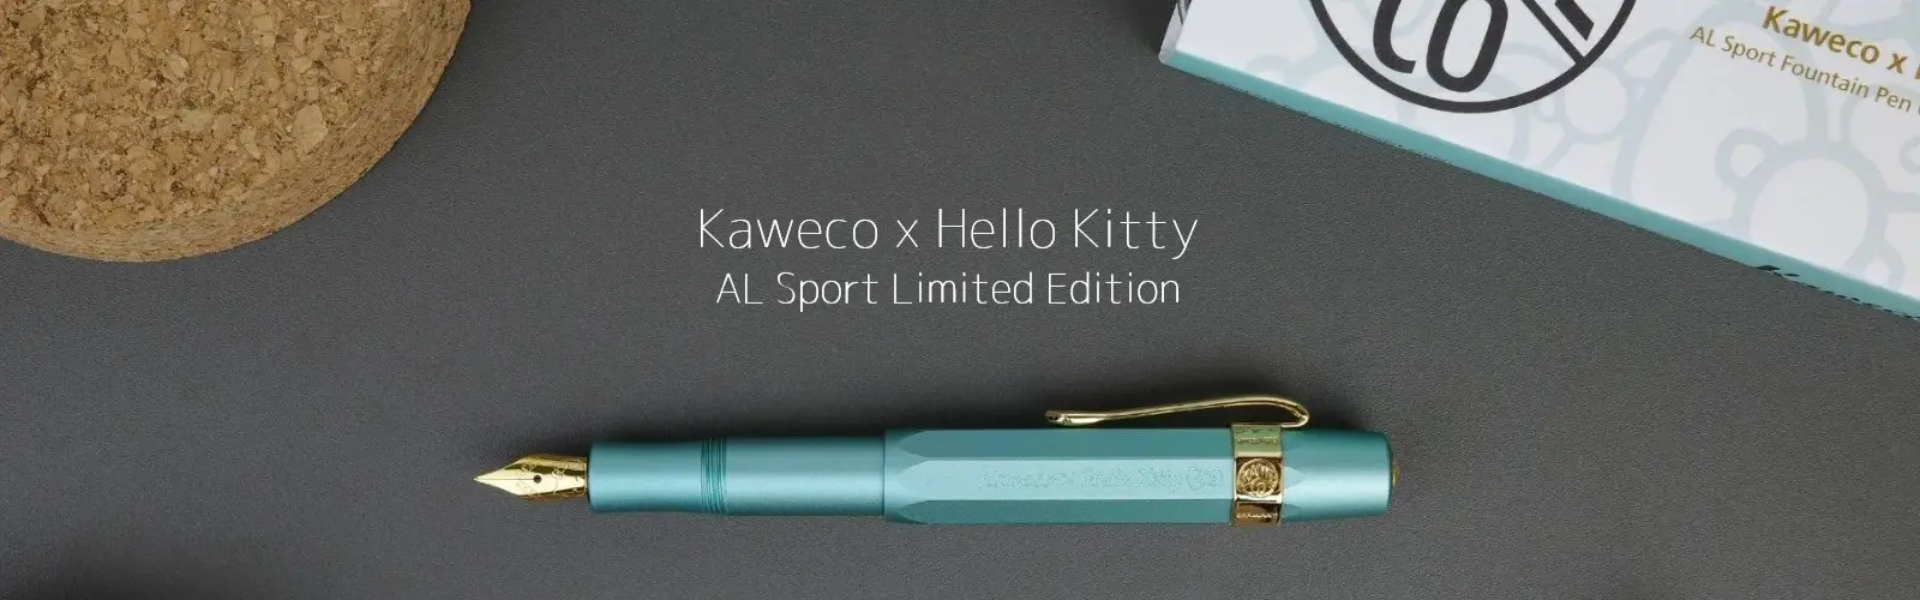 kaweco x hello kitty al sport Limited Edition